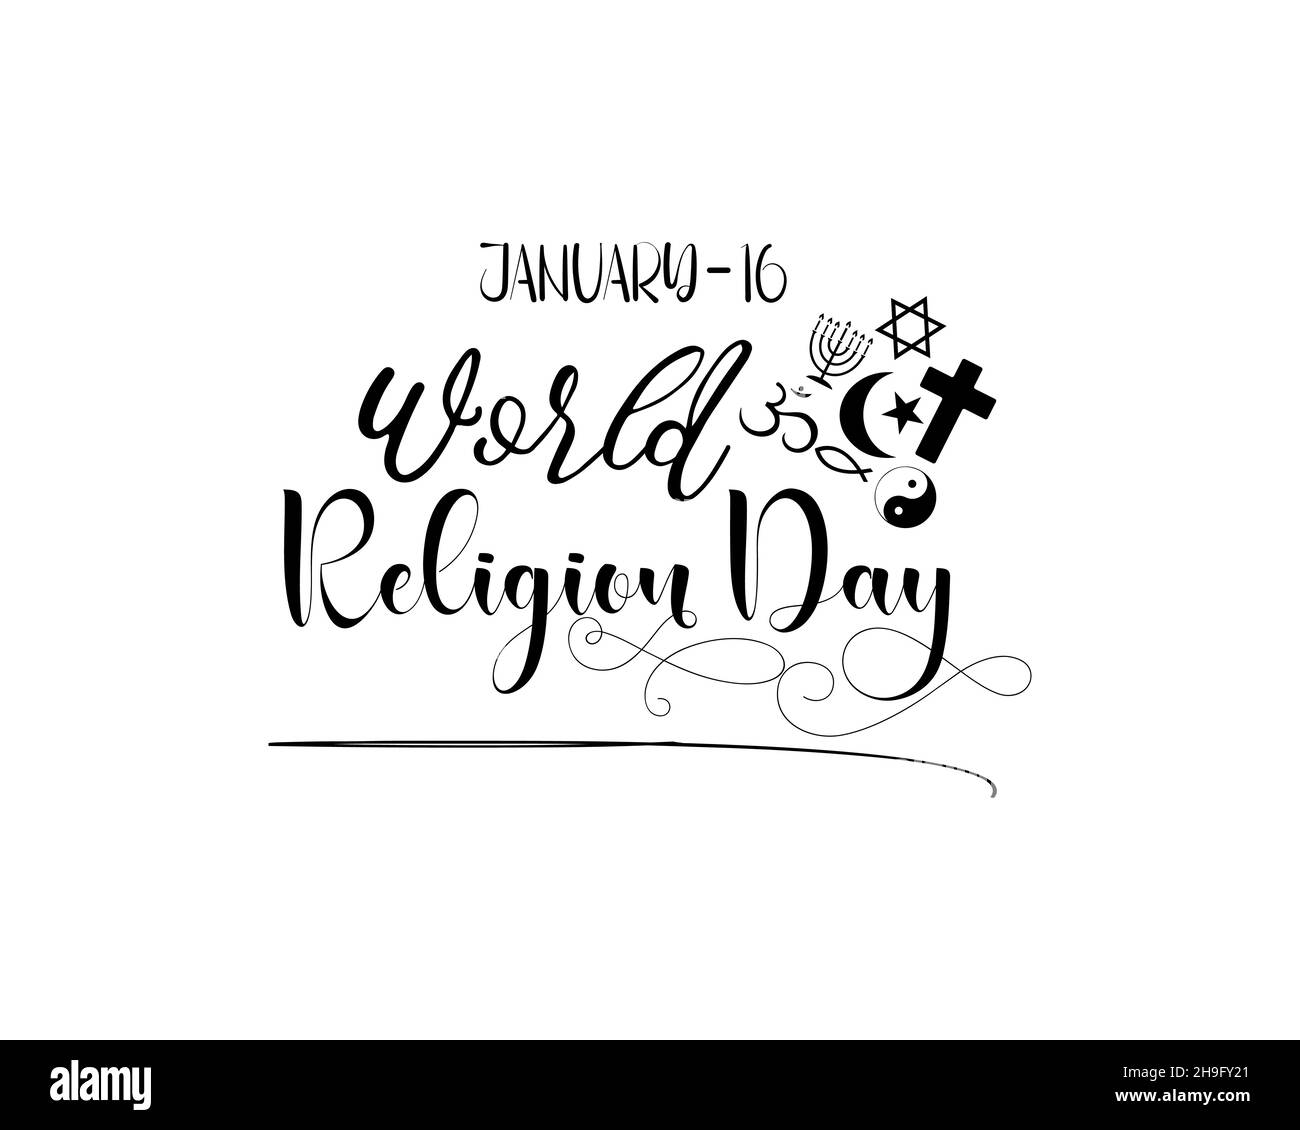 Januar 16 - Kalligraphie Stil Hand Lettering Design für Welt Religion Tag. Vektorvorlage für Banner, Poster, T-Shirt, Karte. Stock Vektor